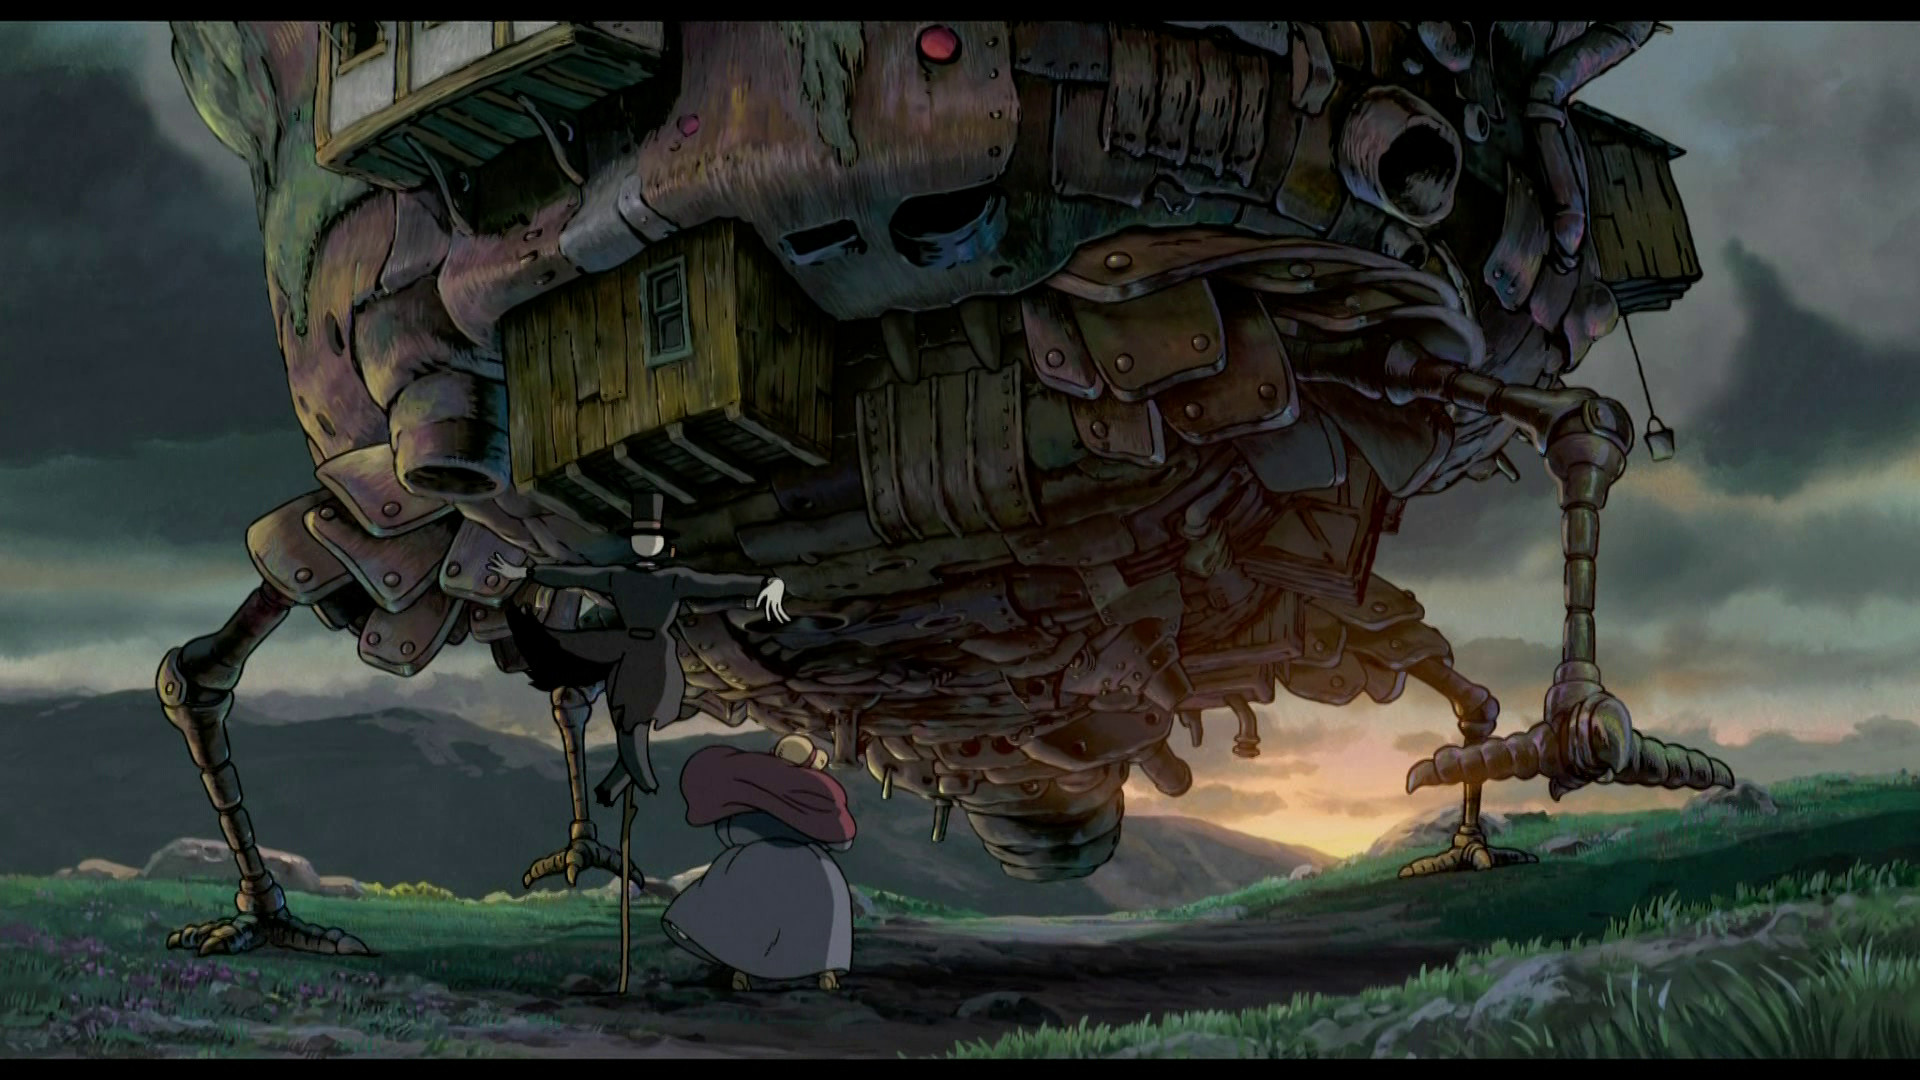 1920x1080 Hayao Miyazaki Howl's Moving Castle wallpaper - 896140